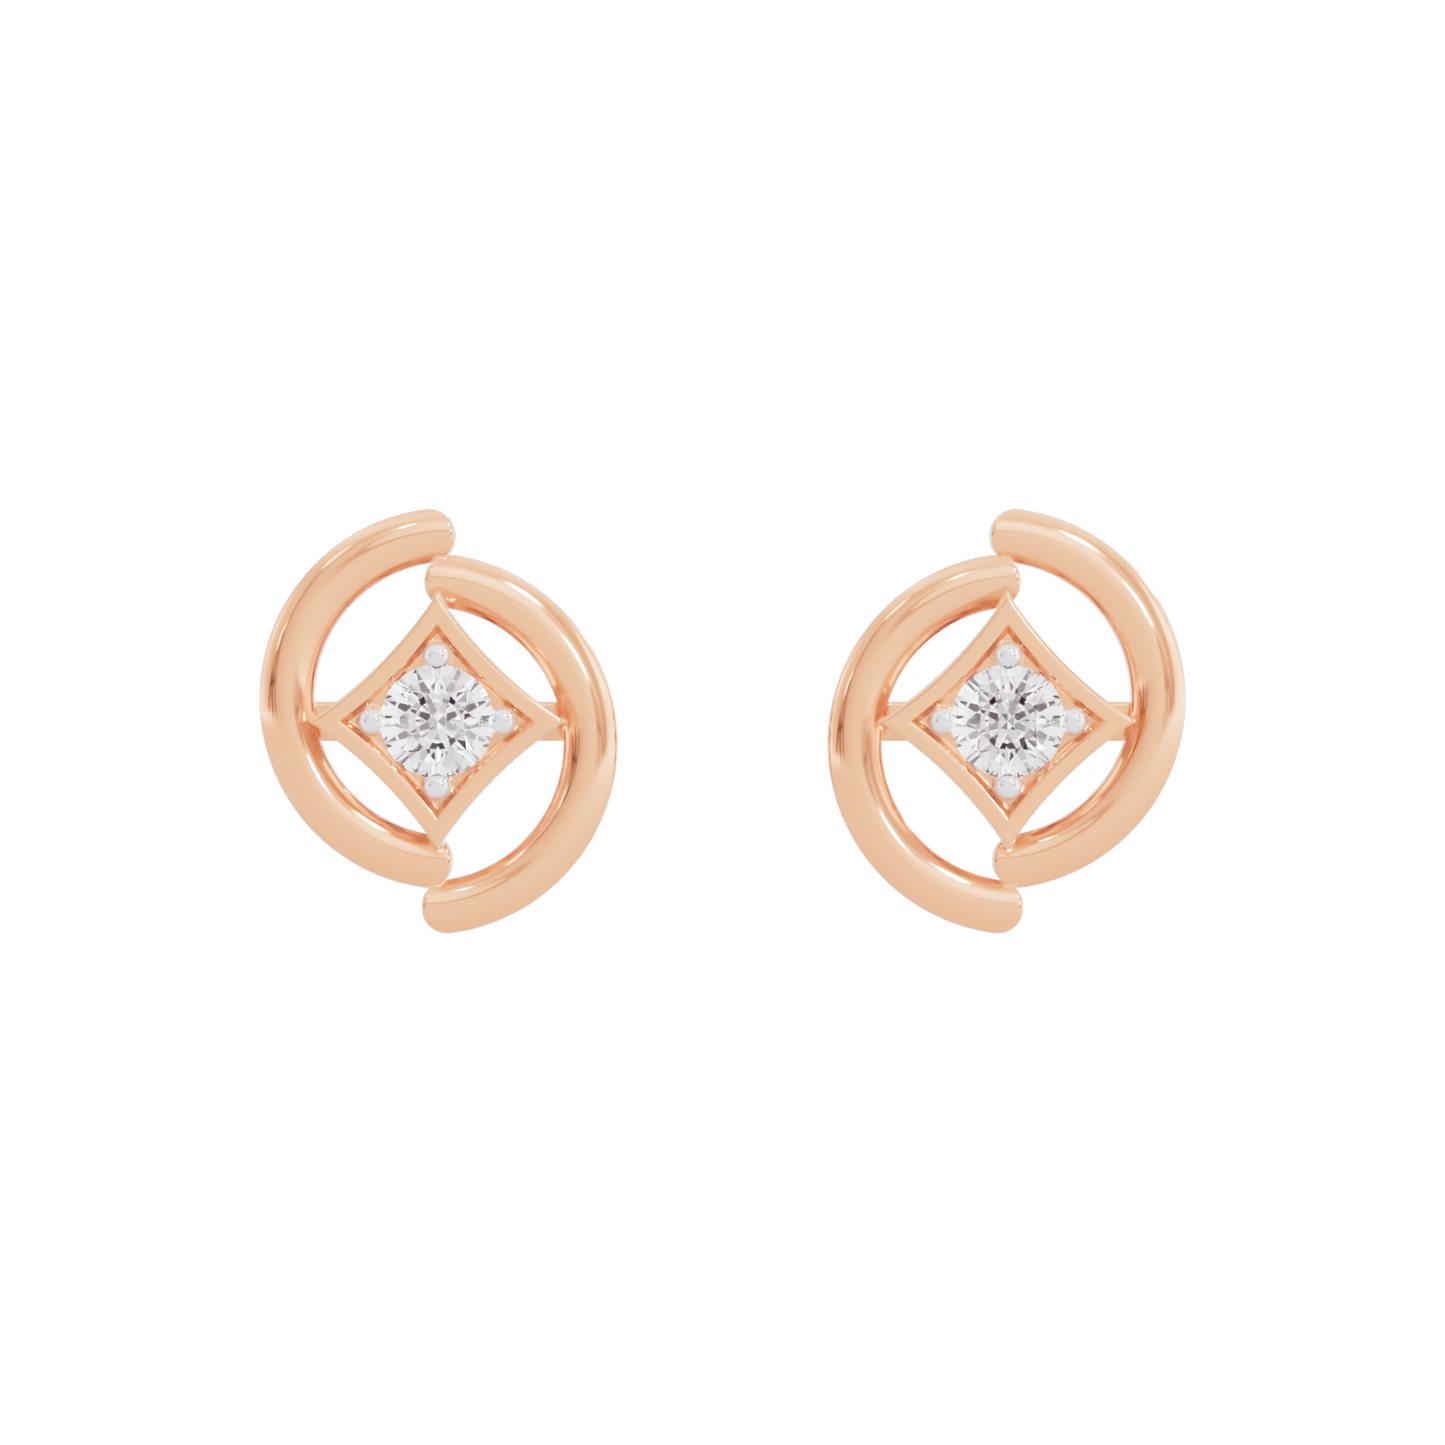 Connecting Diamond Earrings